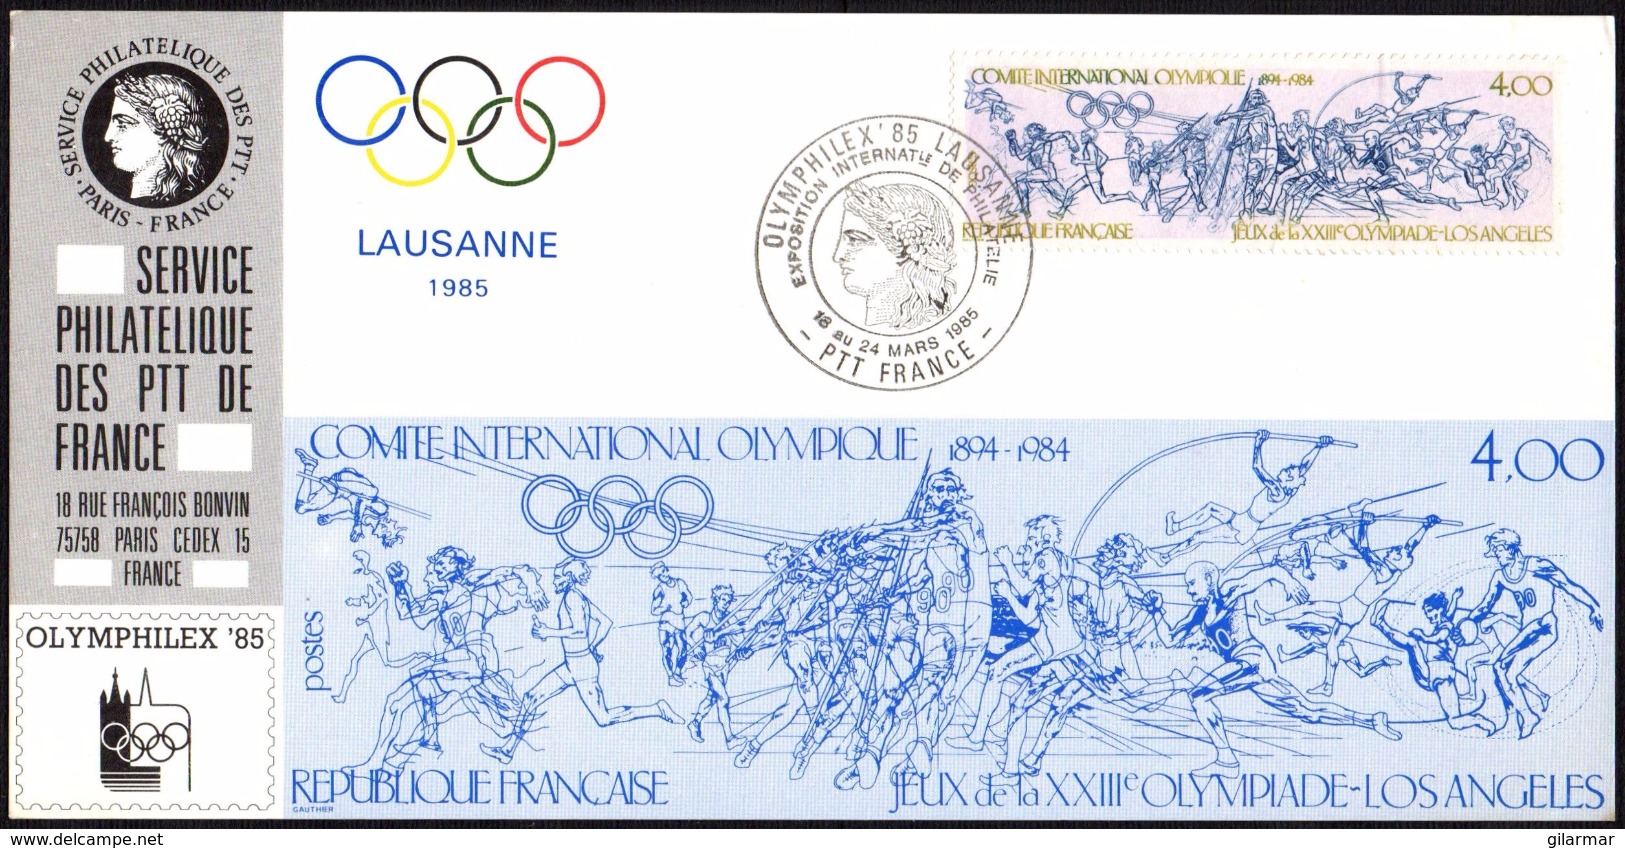 FRANCE LAUSANNE 1985 - WORLD SPORT OLYMPIC PHILATELIC EXHIBITION "OLYMPHILEX '85" - OFFICIAL CARD - Summer 1988: Seoul